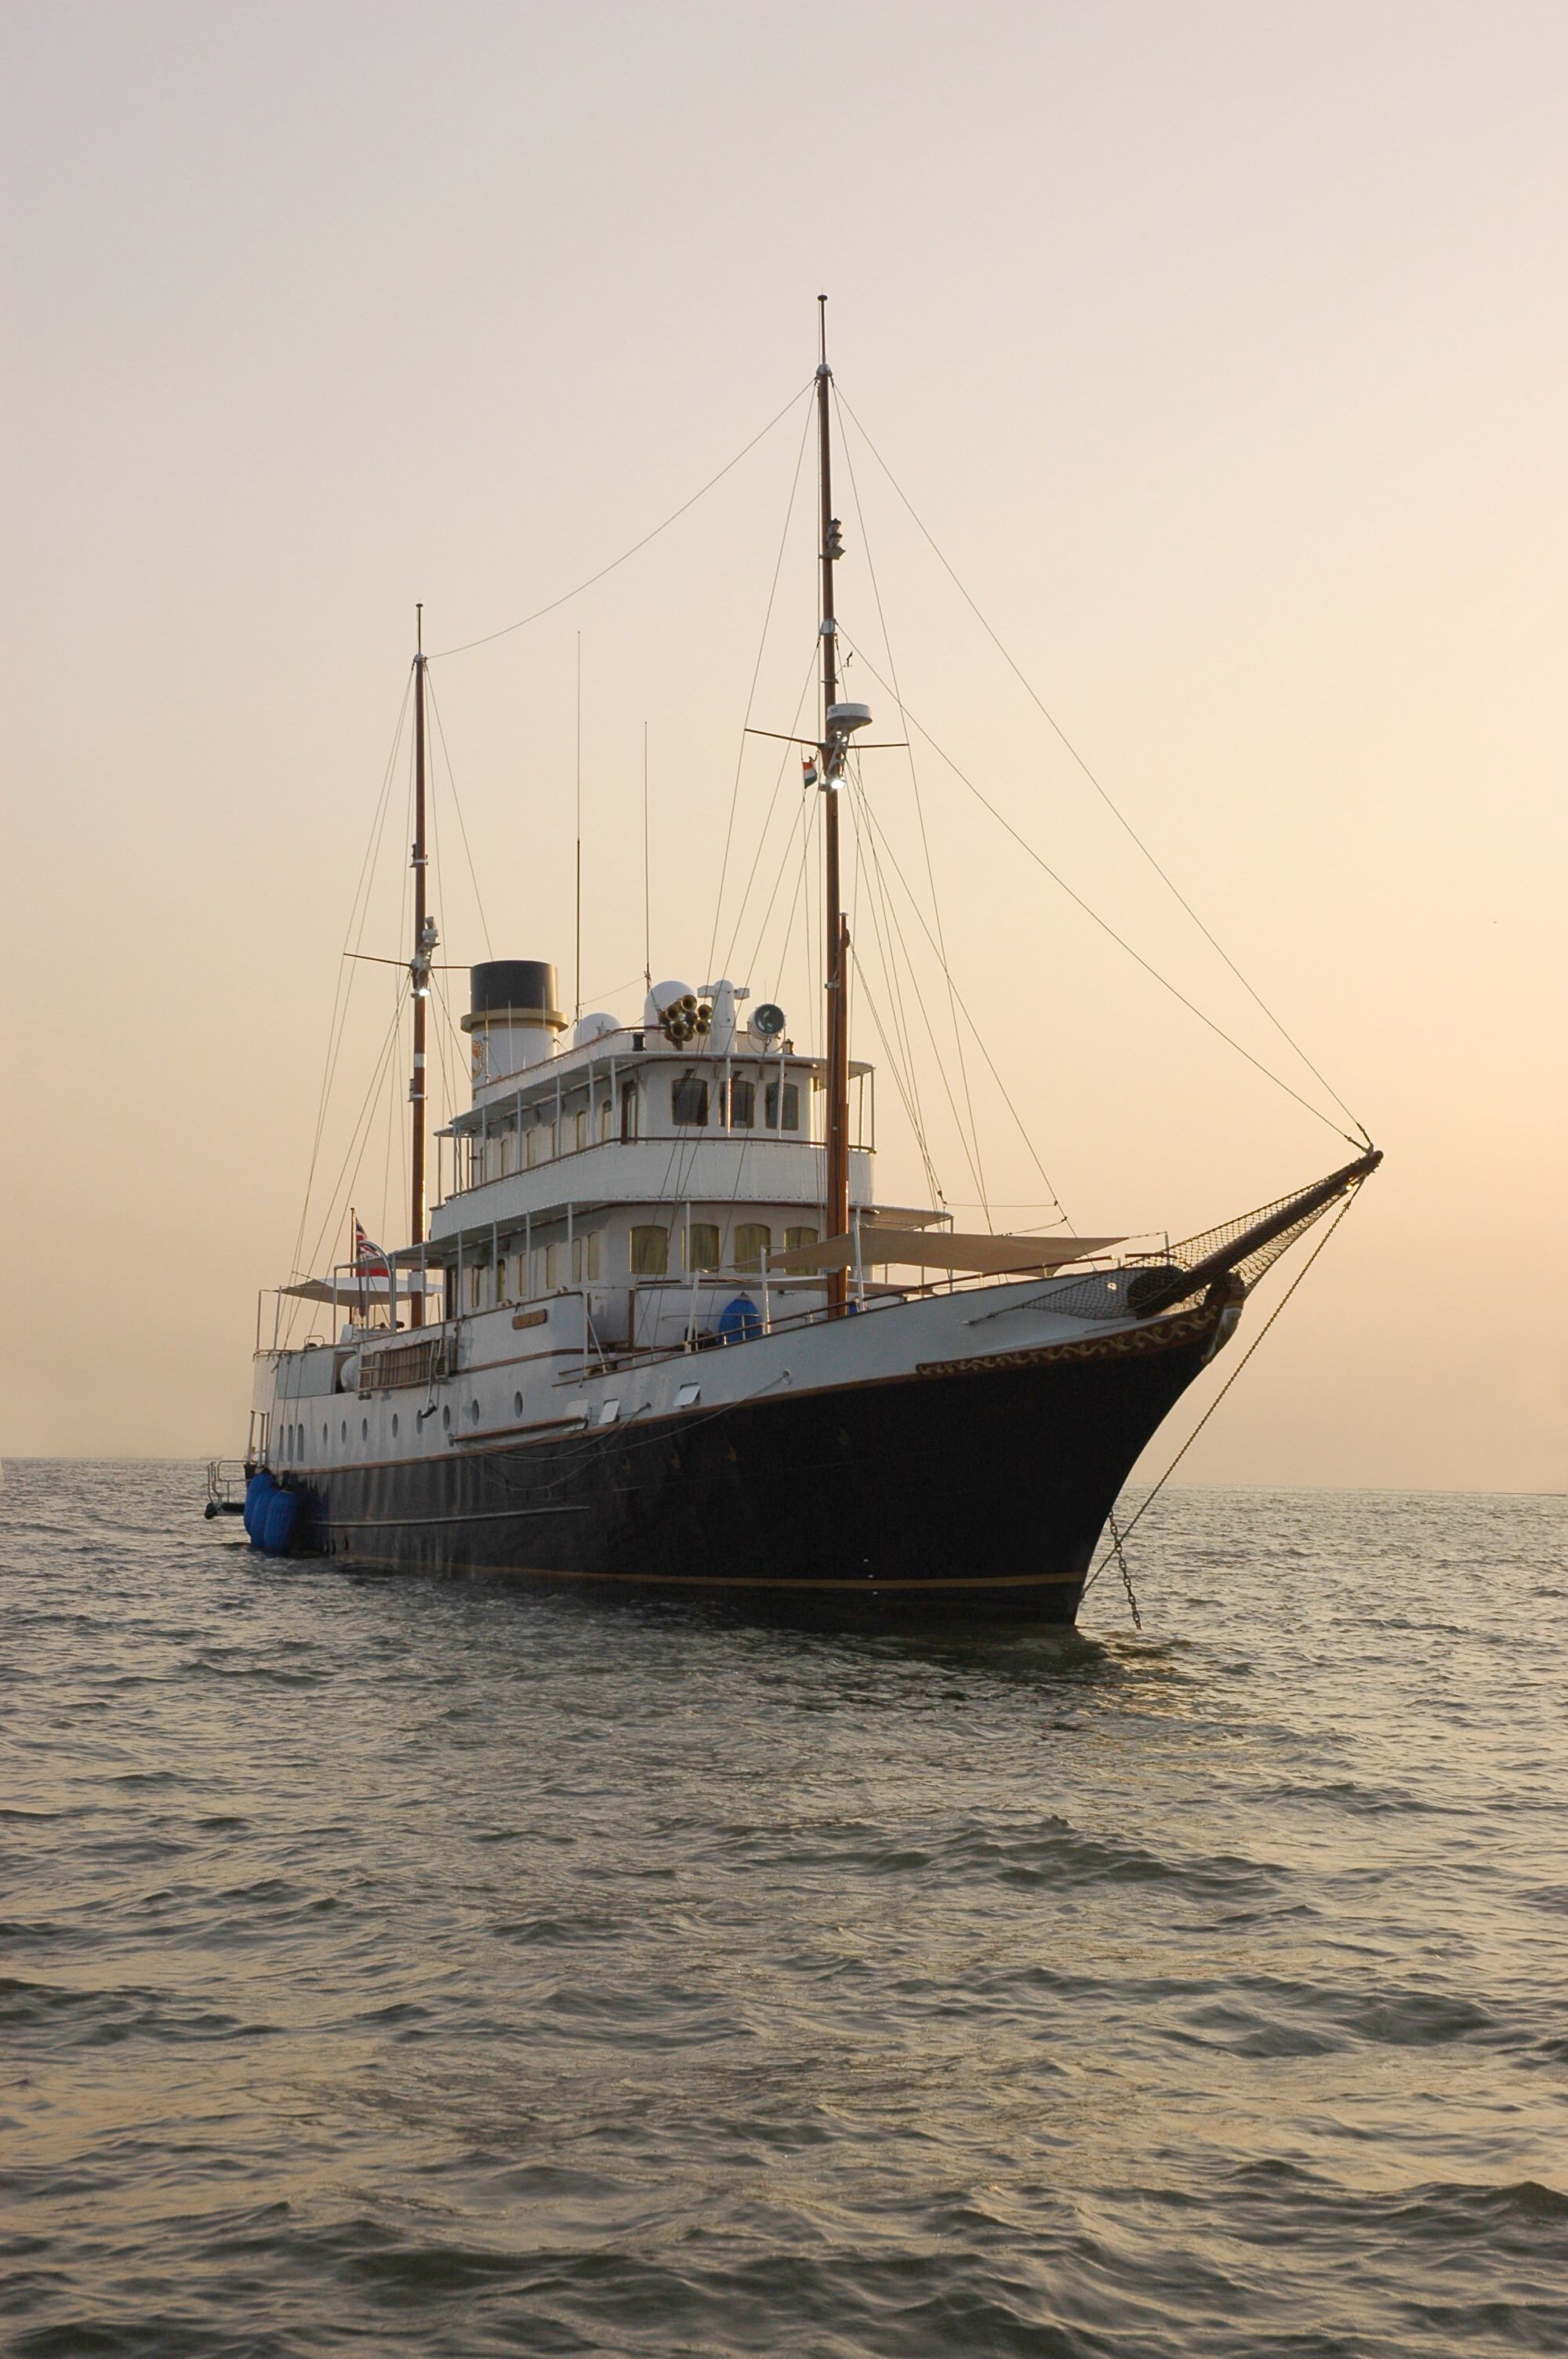 the kalizma yacht